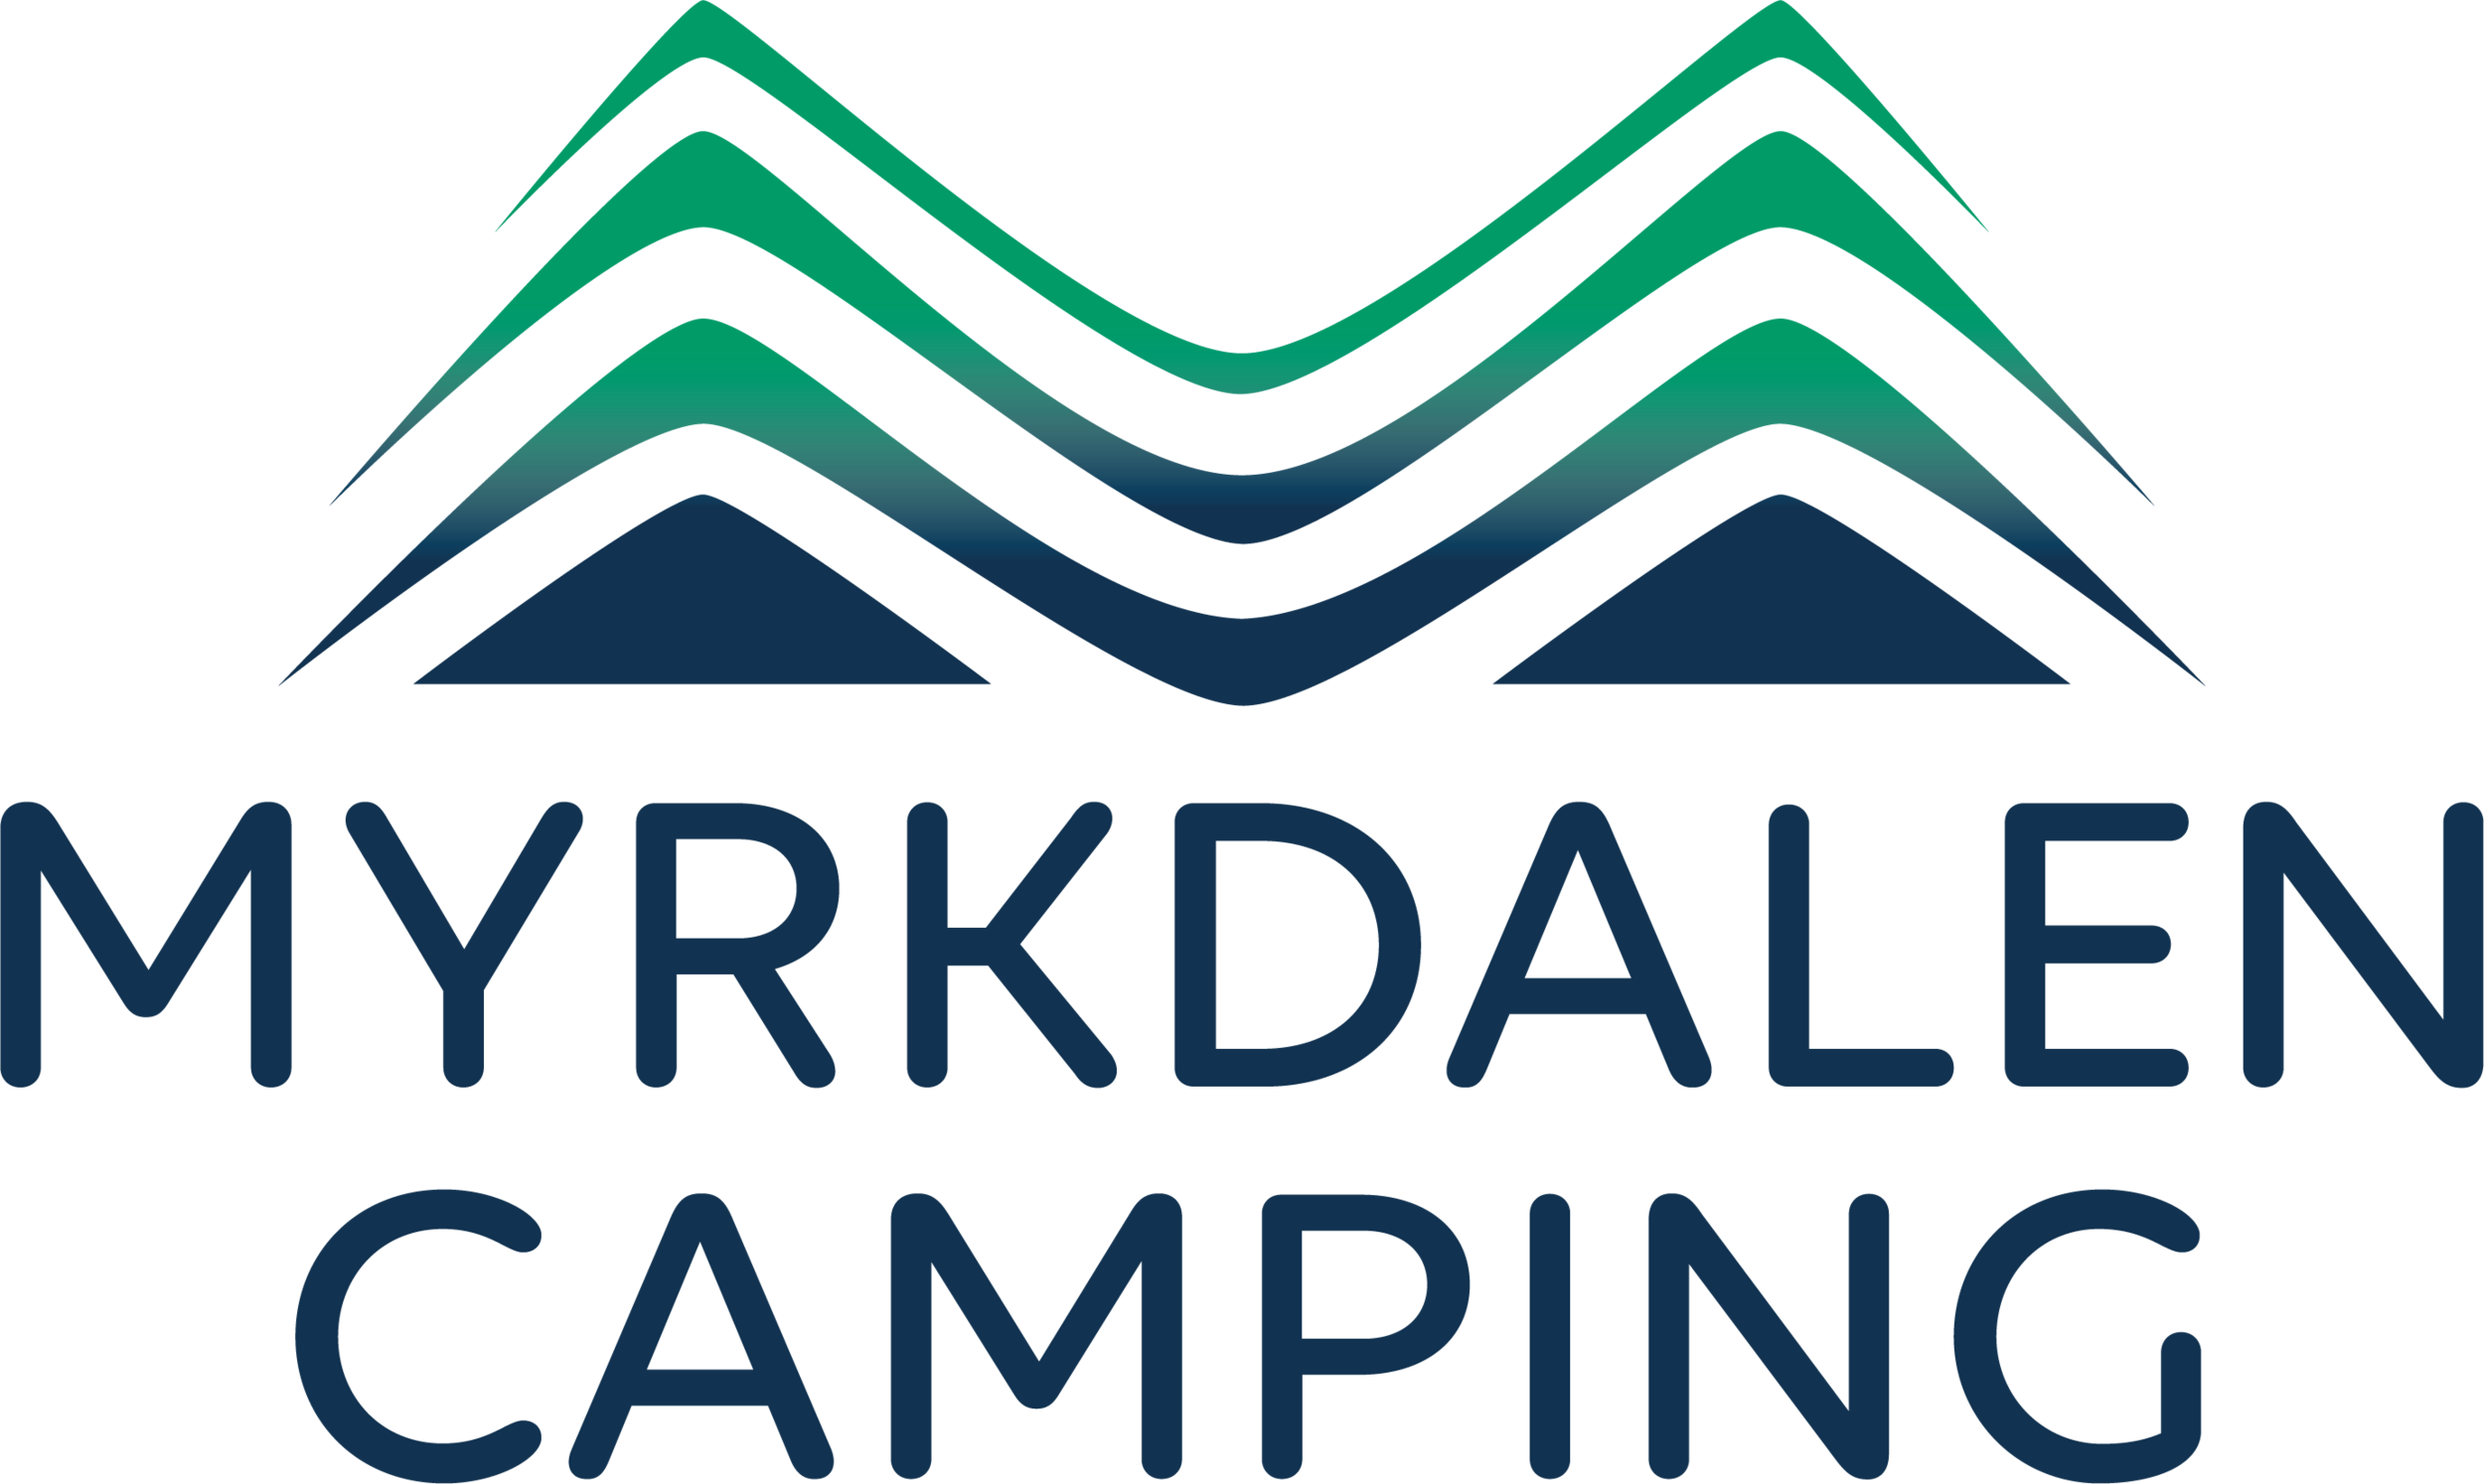 Myrkdalen Camping as